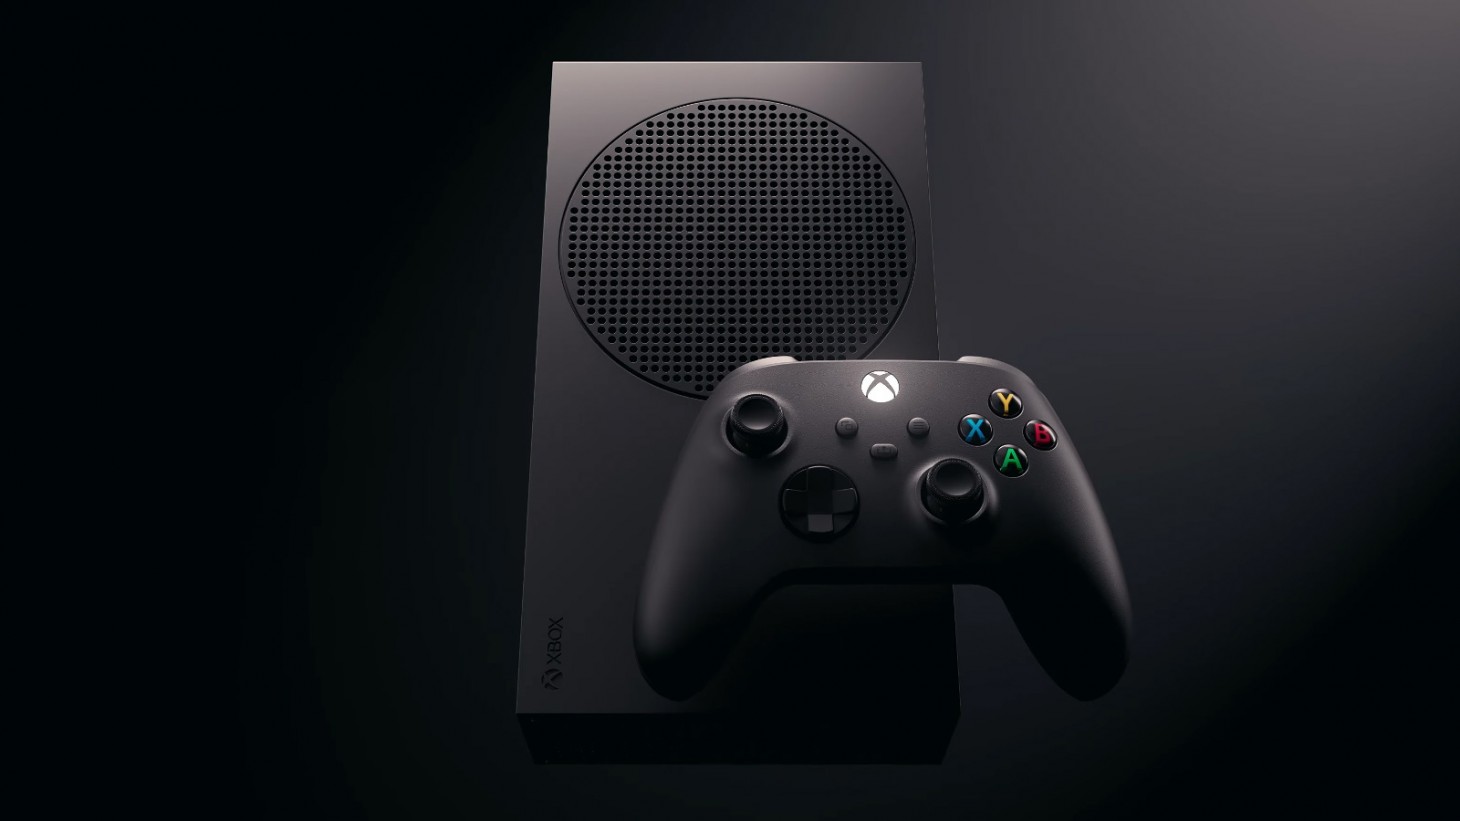 Microsoft Xbox One S, incl. game, 1 TB, white